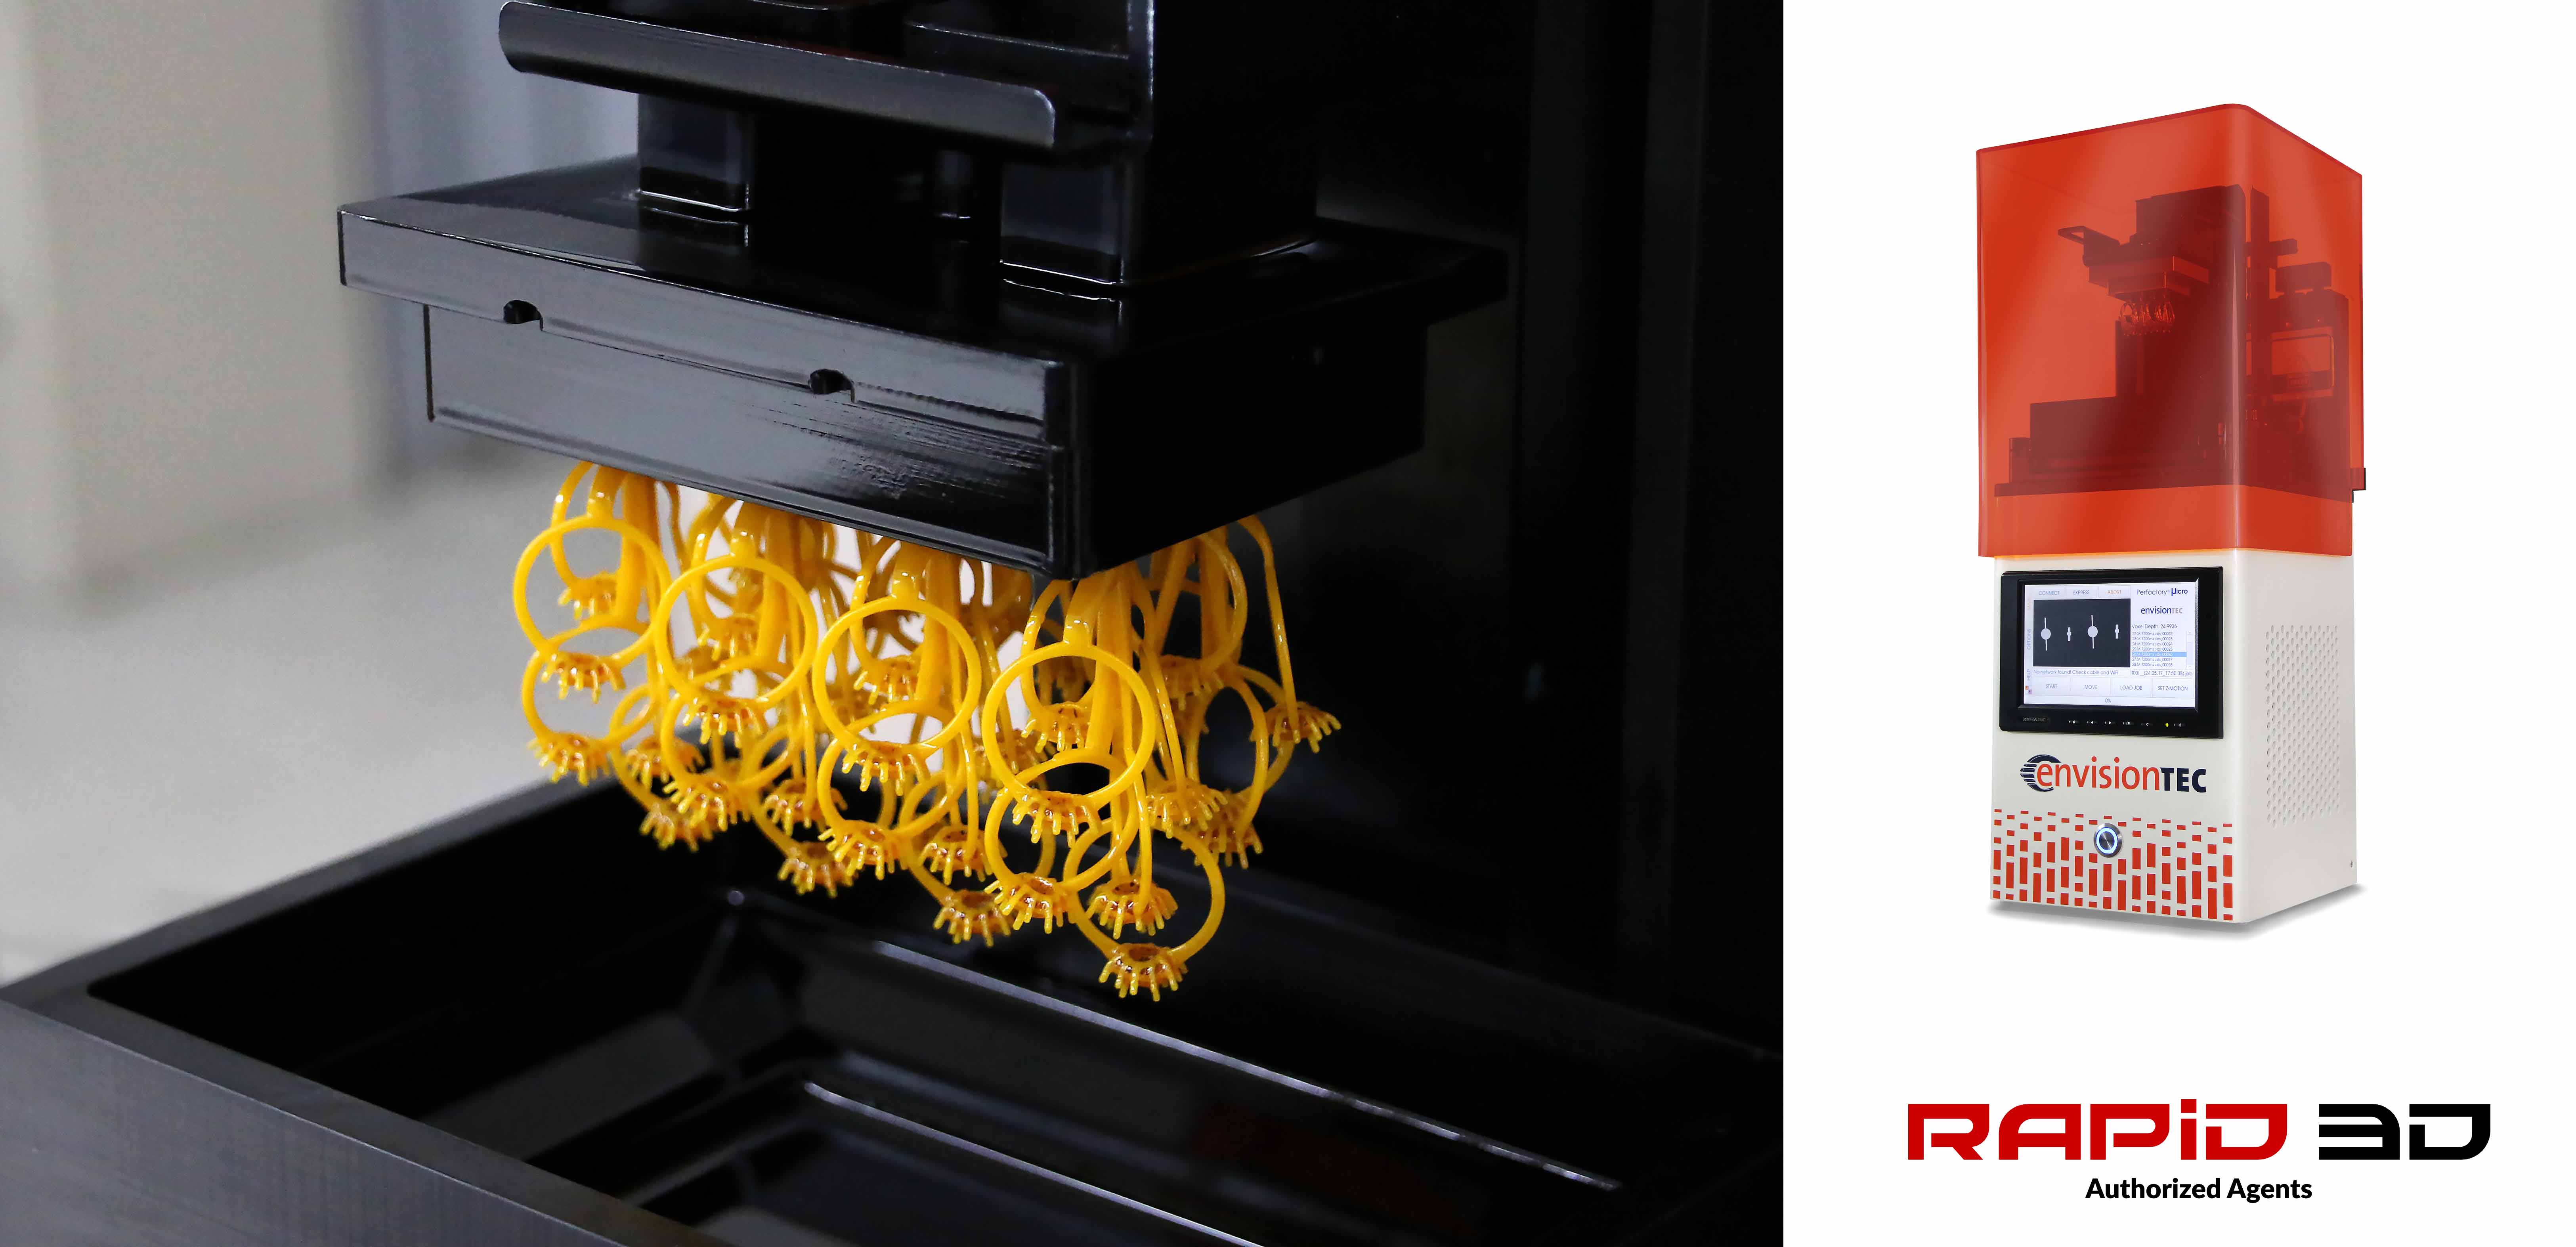 Rapid 3D - EnvisionTEC cDLM 3D Printer Easy Cast 2.0 Material